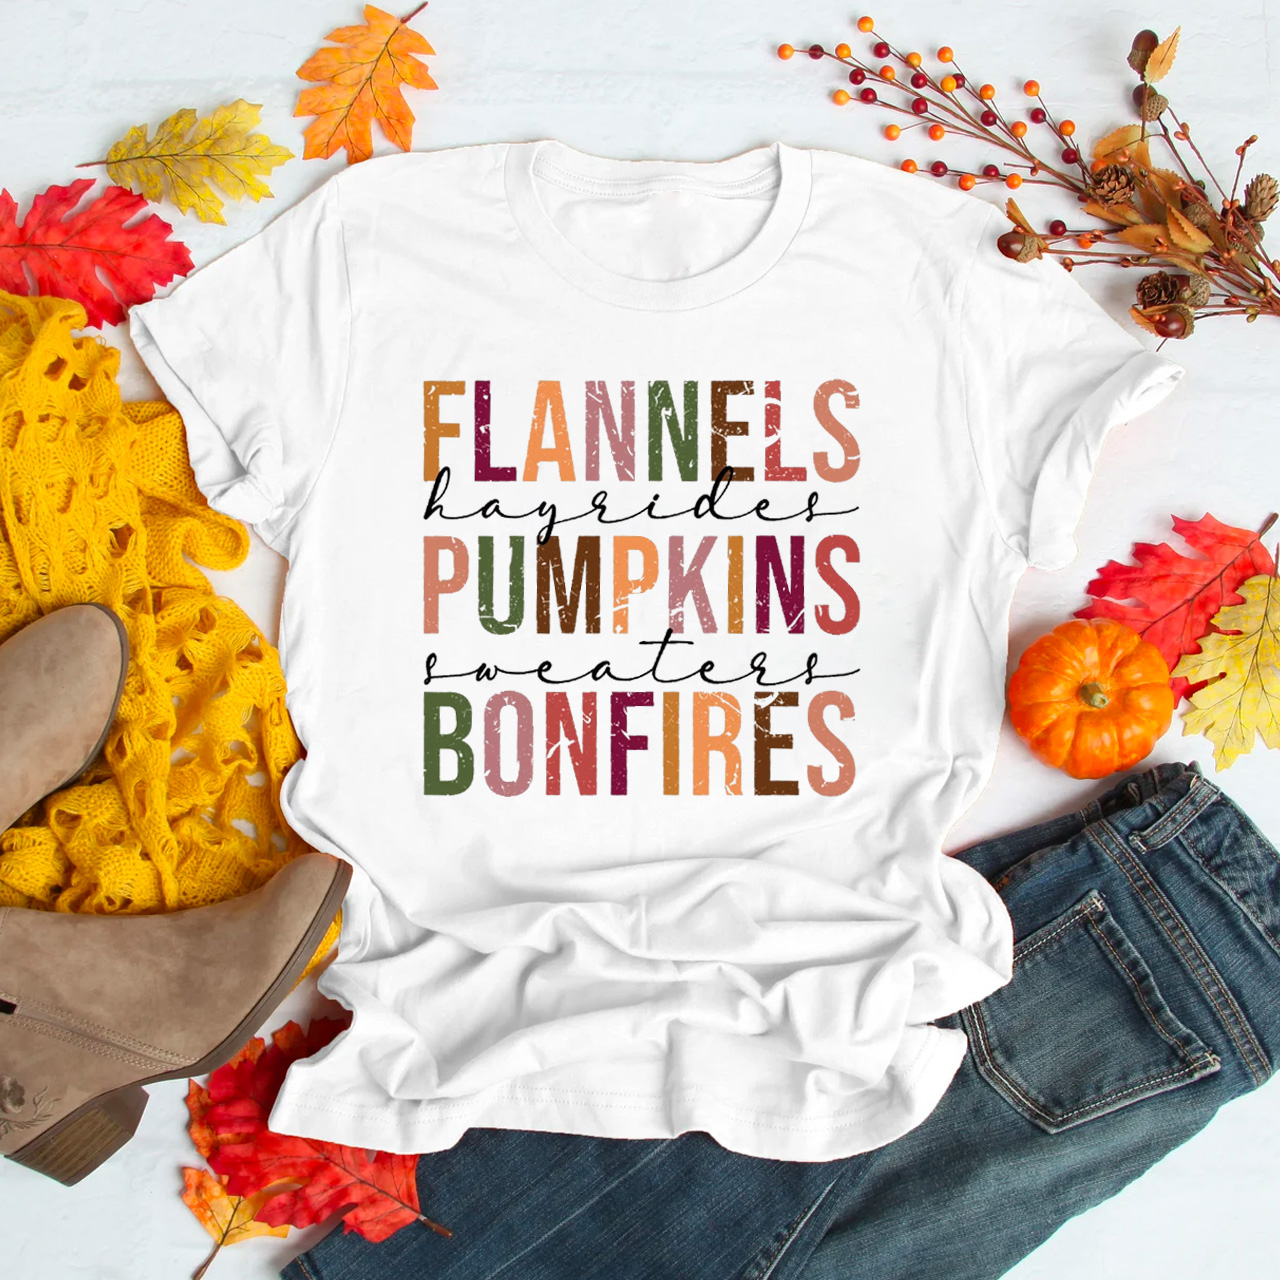 Flannels Pumpkins Bonfires Shirtll Shirts